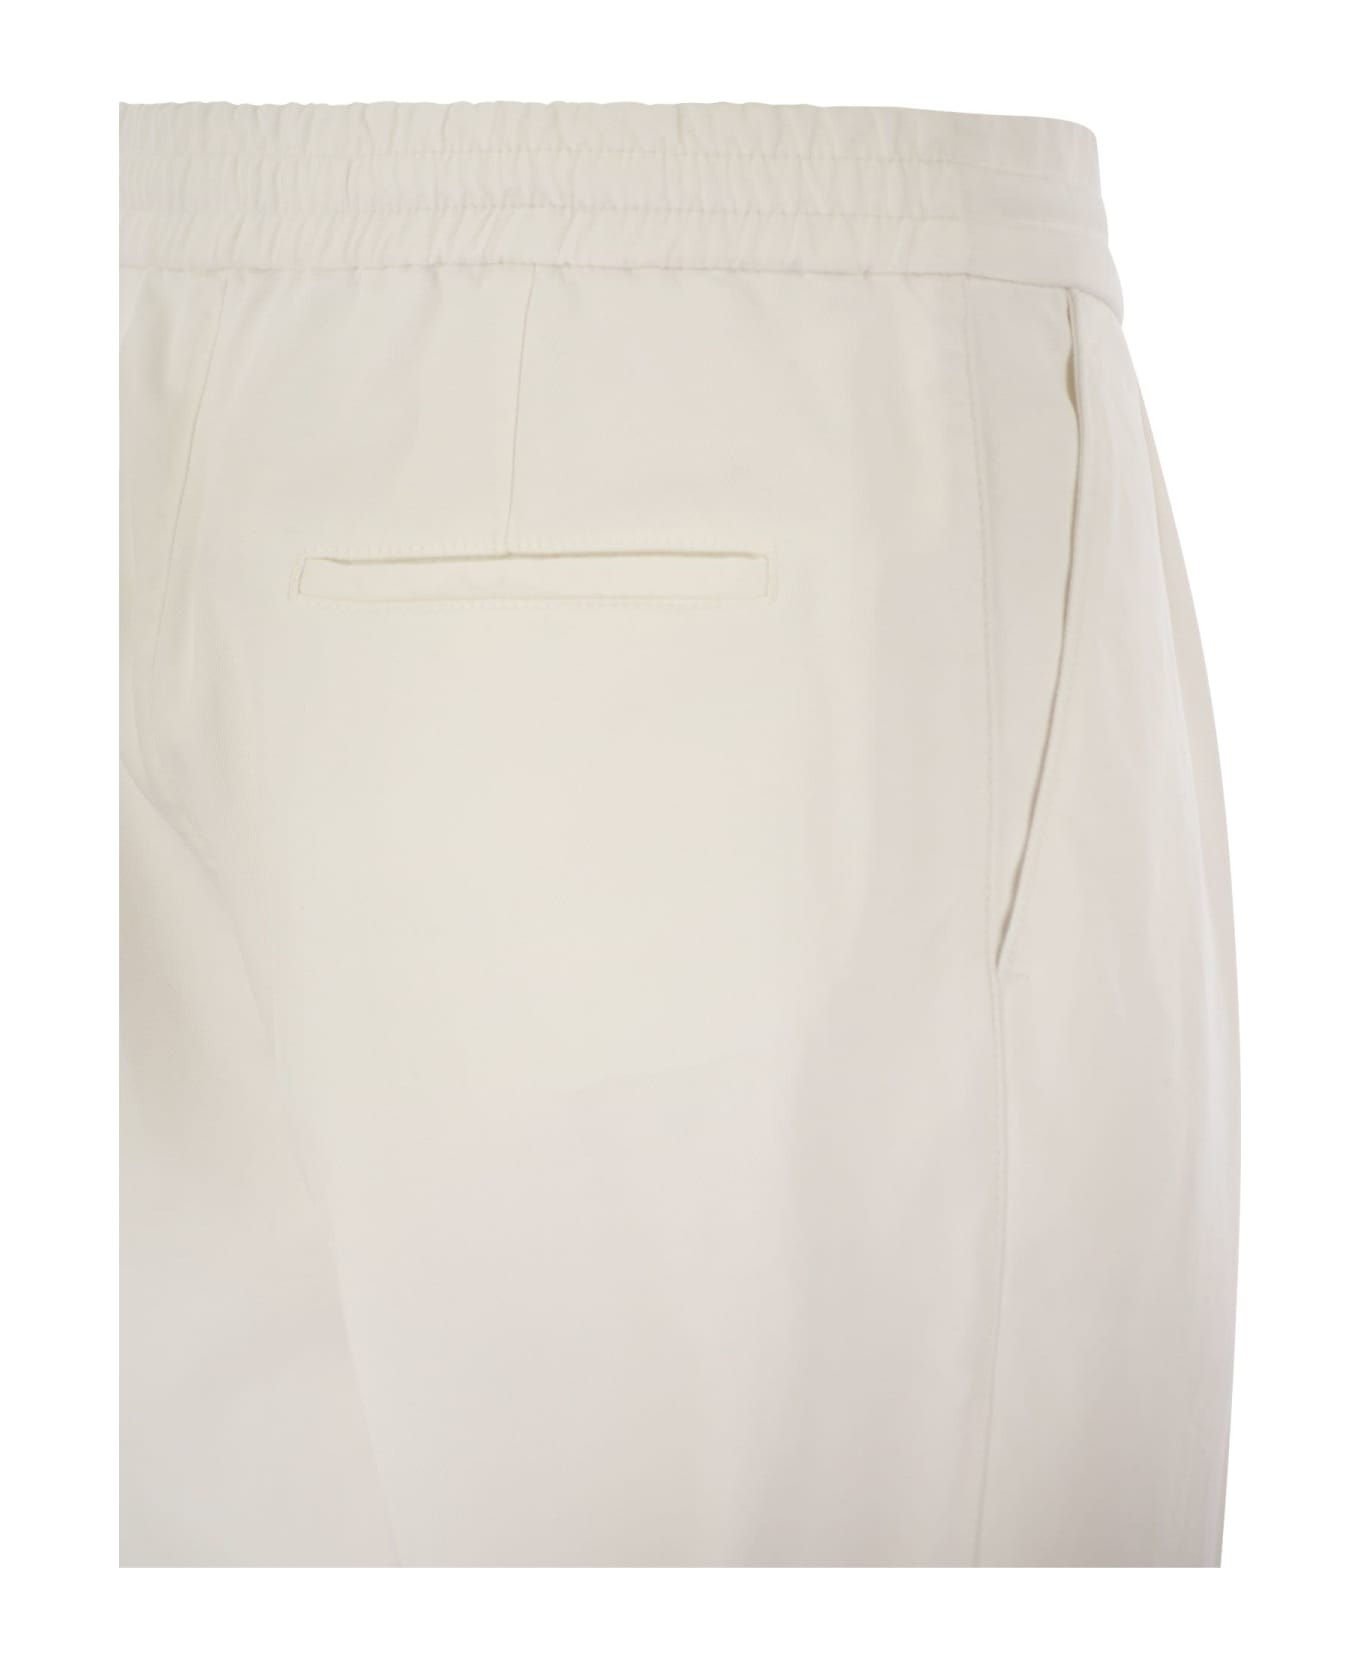 Brunello Cucinelli Cotton Drawstring Pants - White